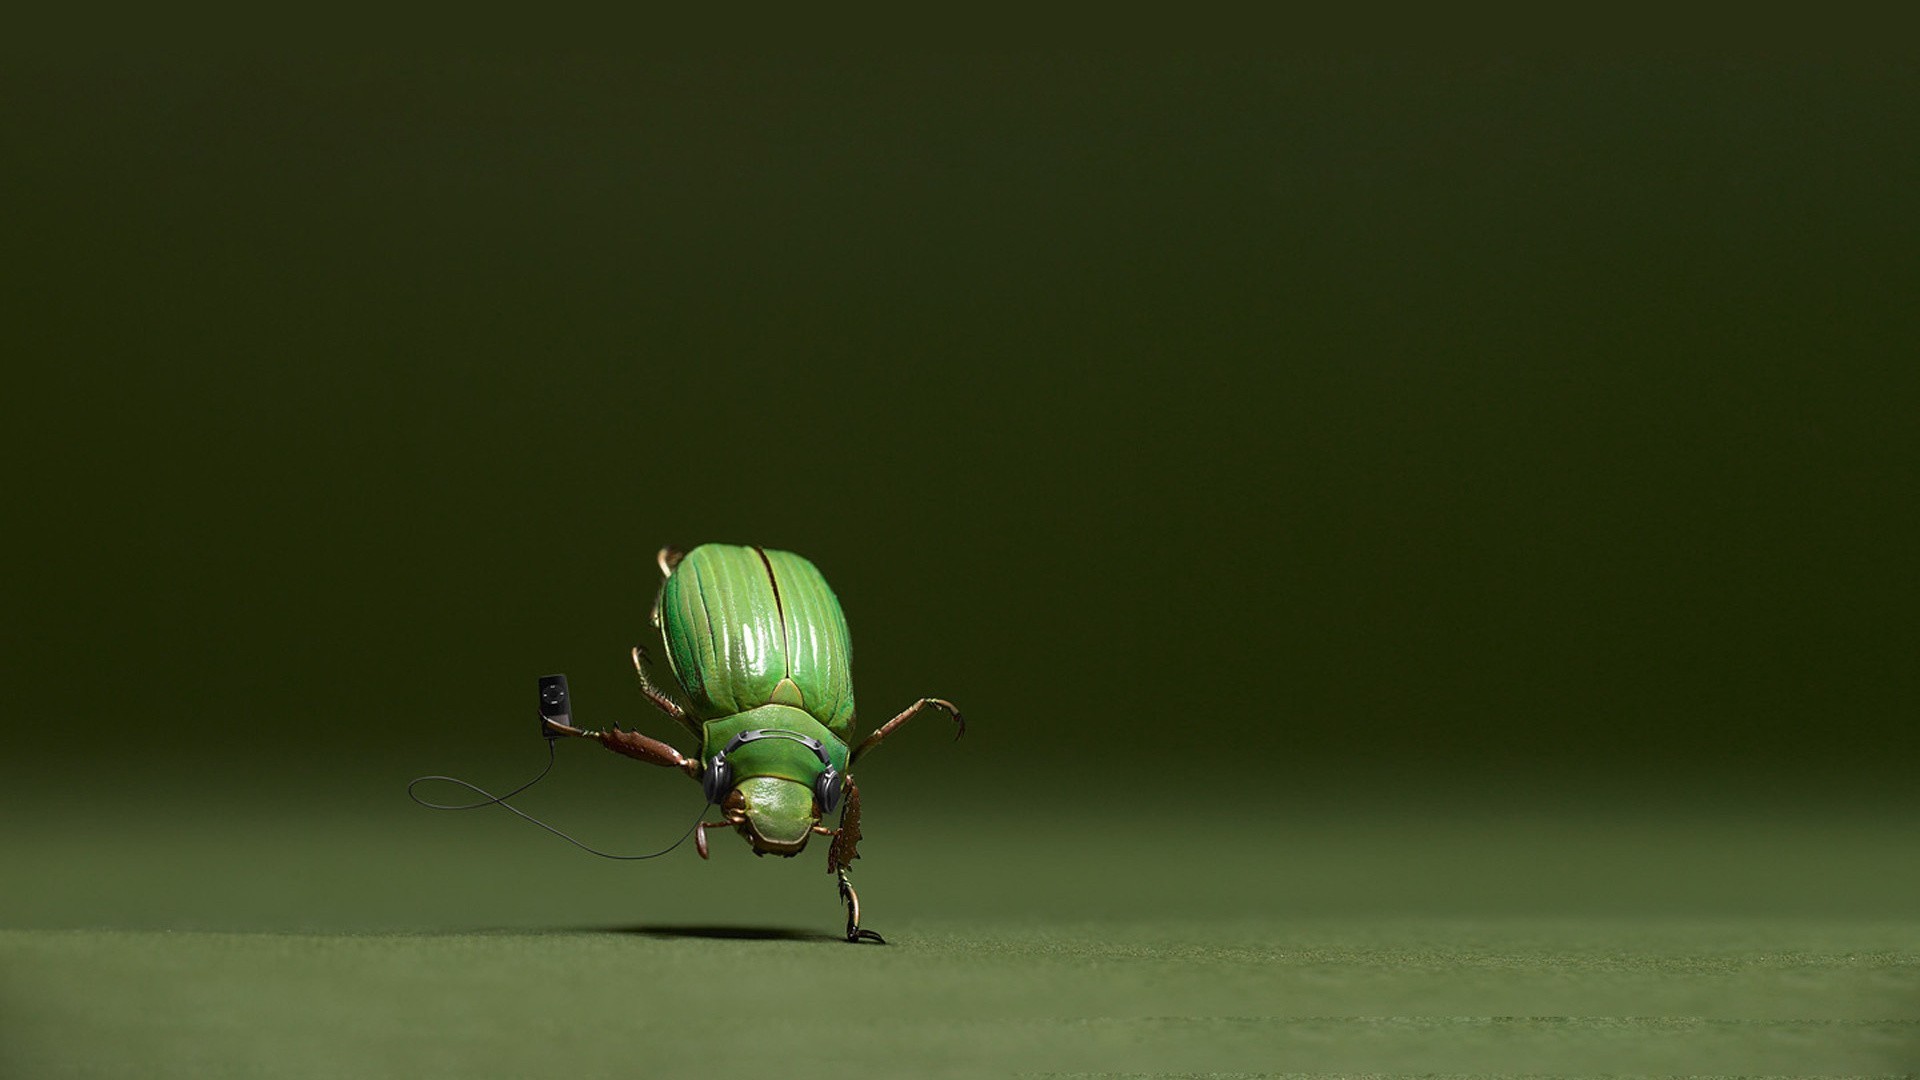 General 1920x1080 green insect macro animals digital art humor iPod green background CGI beetles